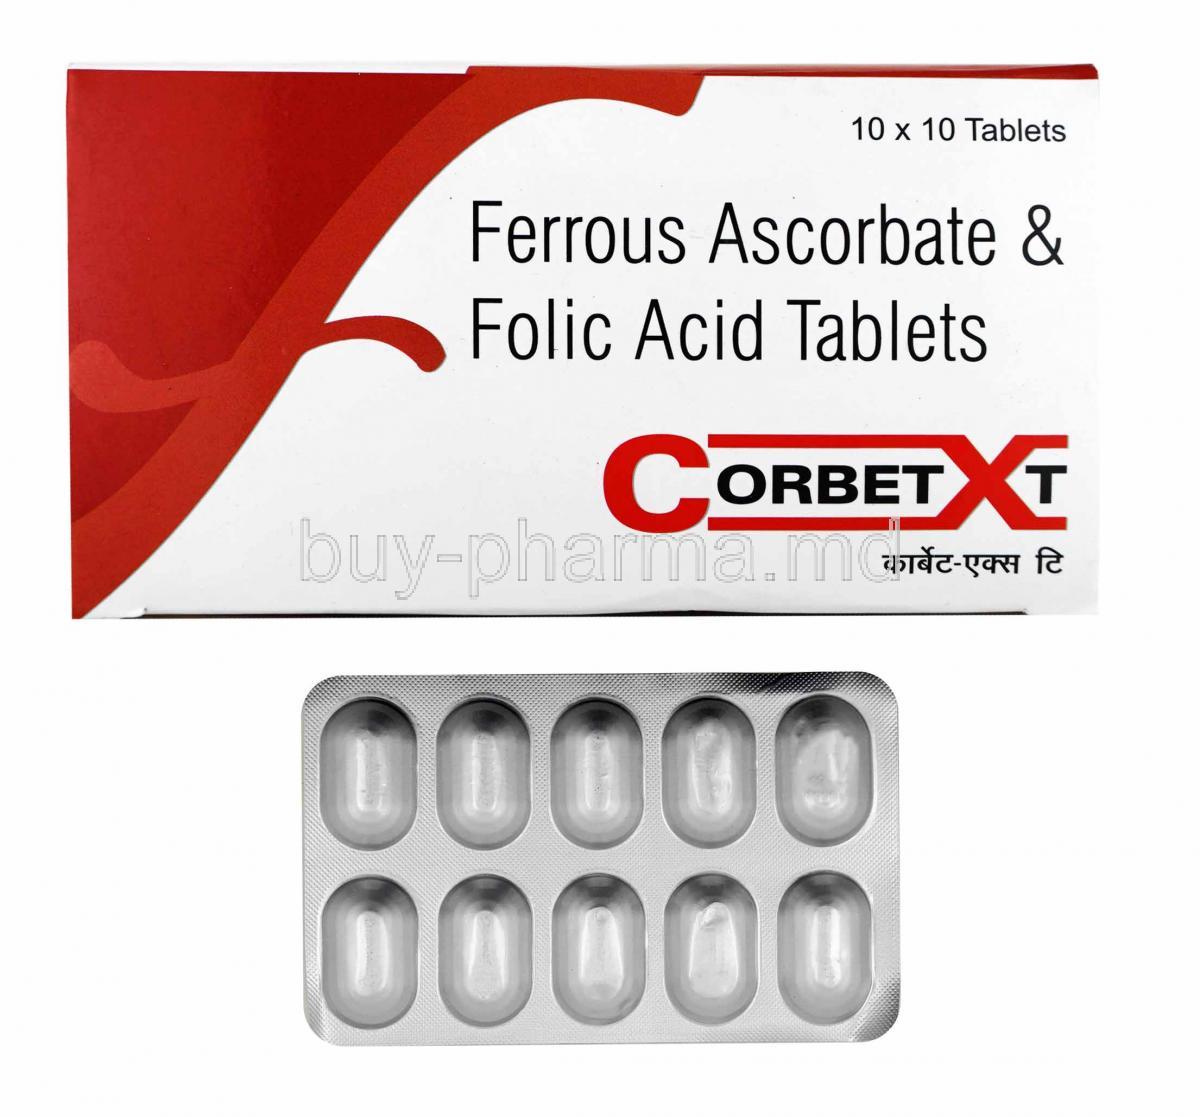 Corbet XT, Elemental Iron and Folic Acid box and tablets